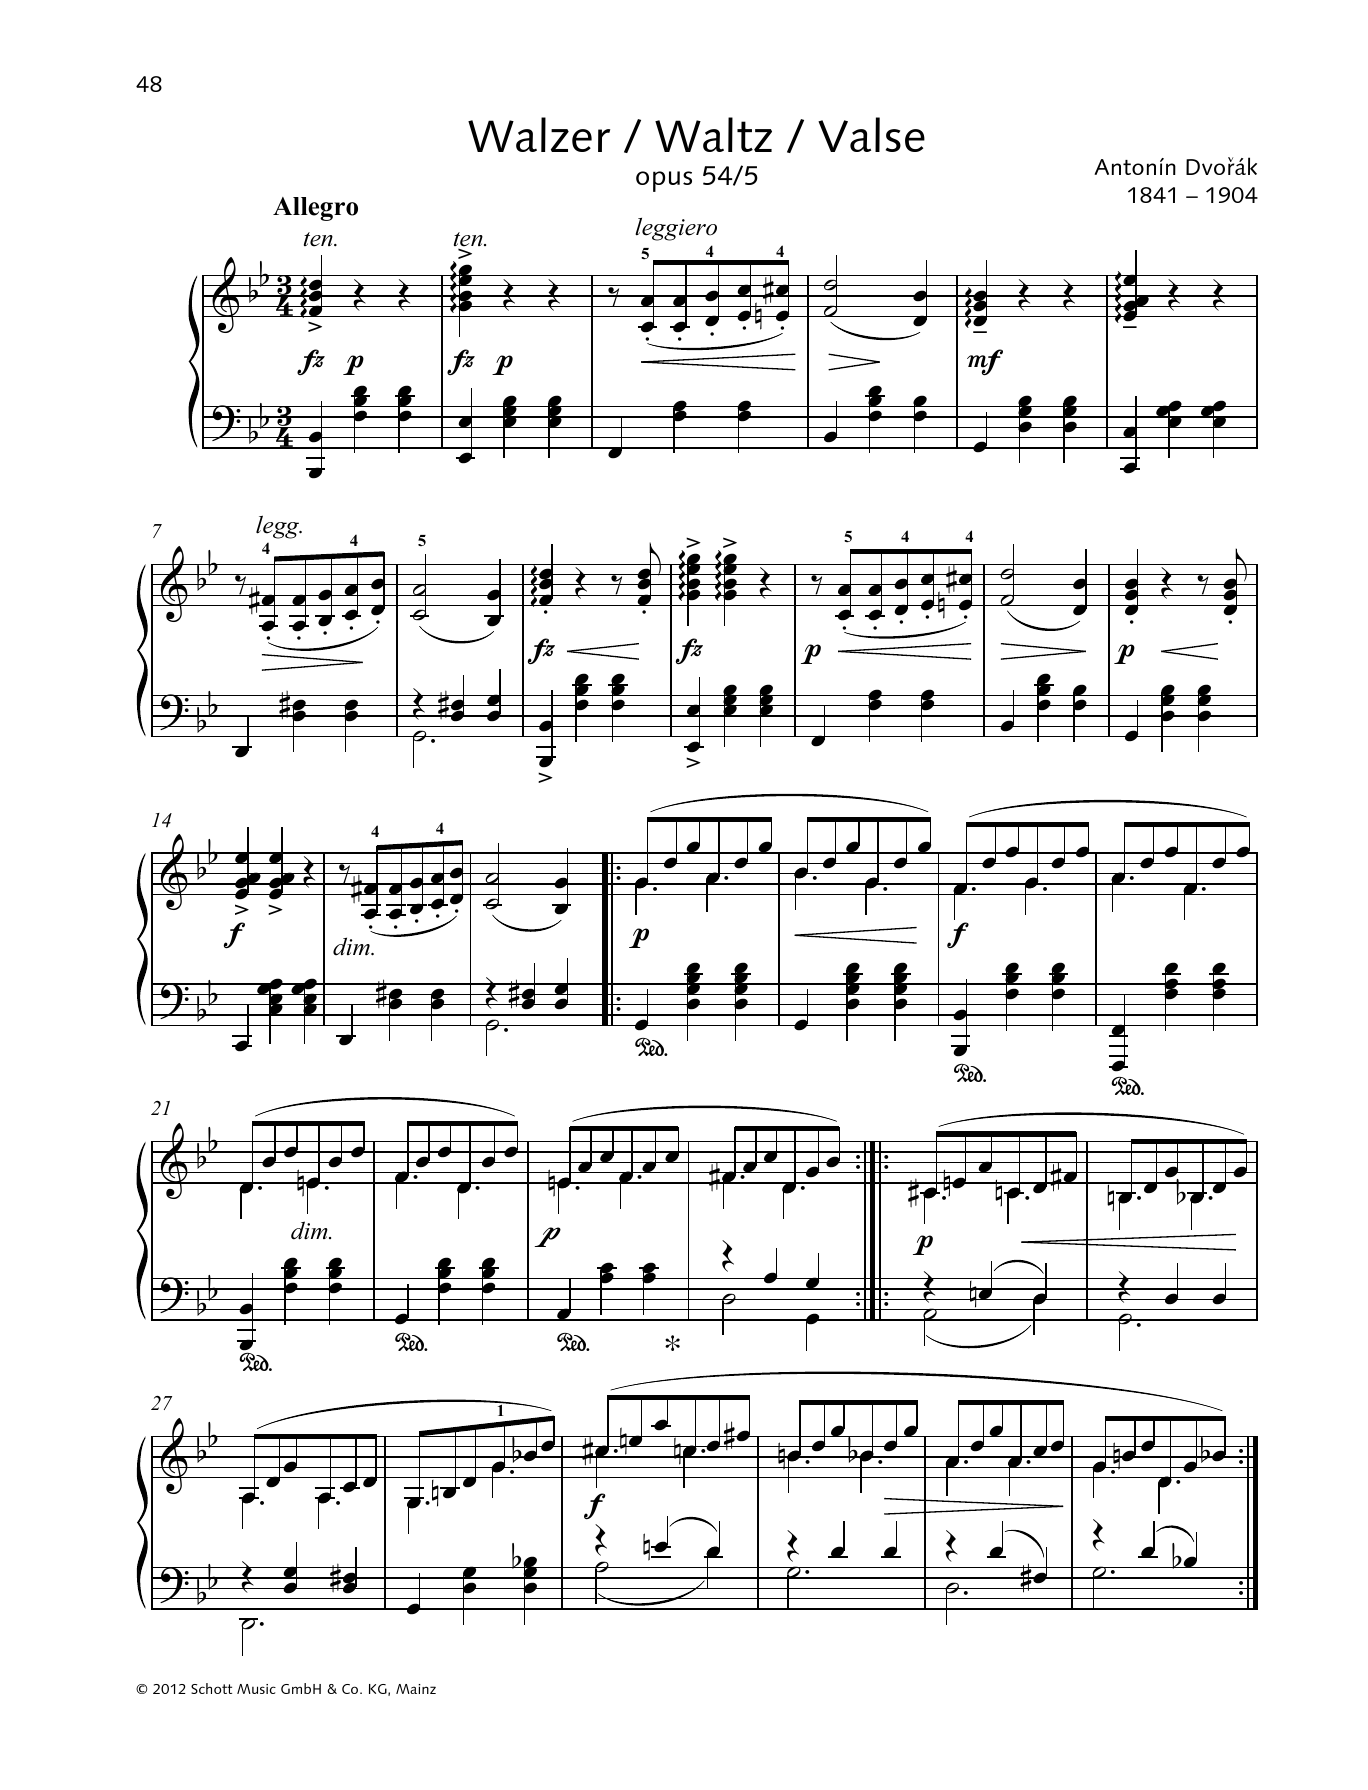 Antonín Dvorák Waltz Sheet Music Notes & Chords for Piano Solo - Download or Print PDF